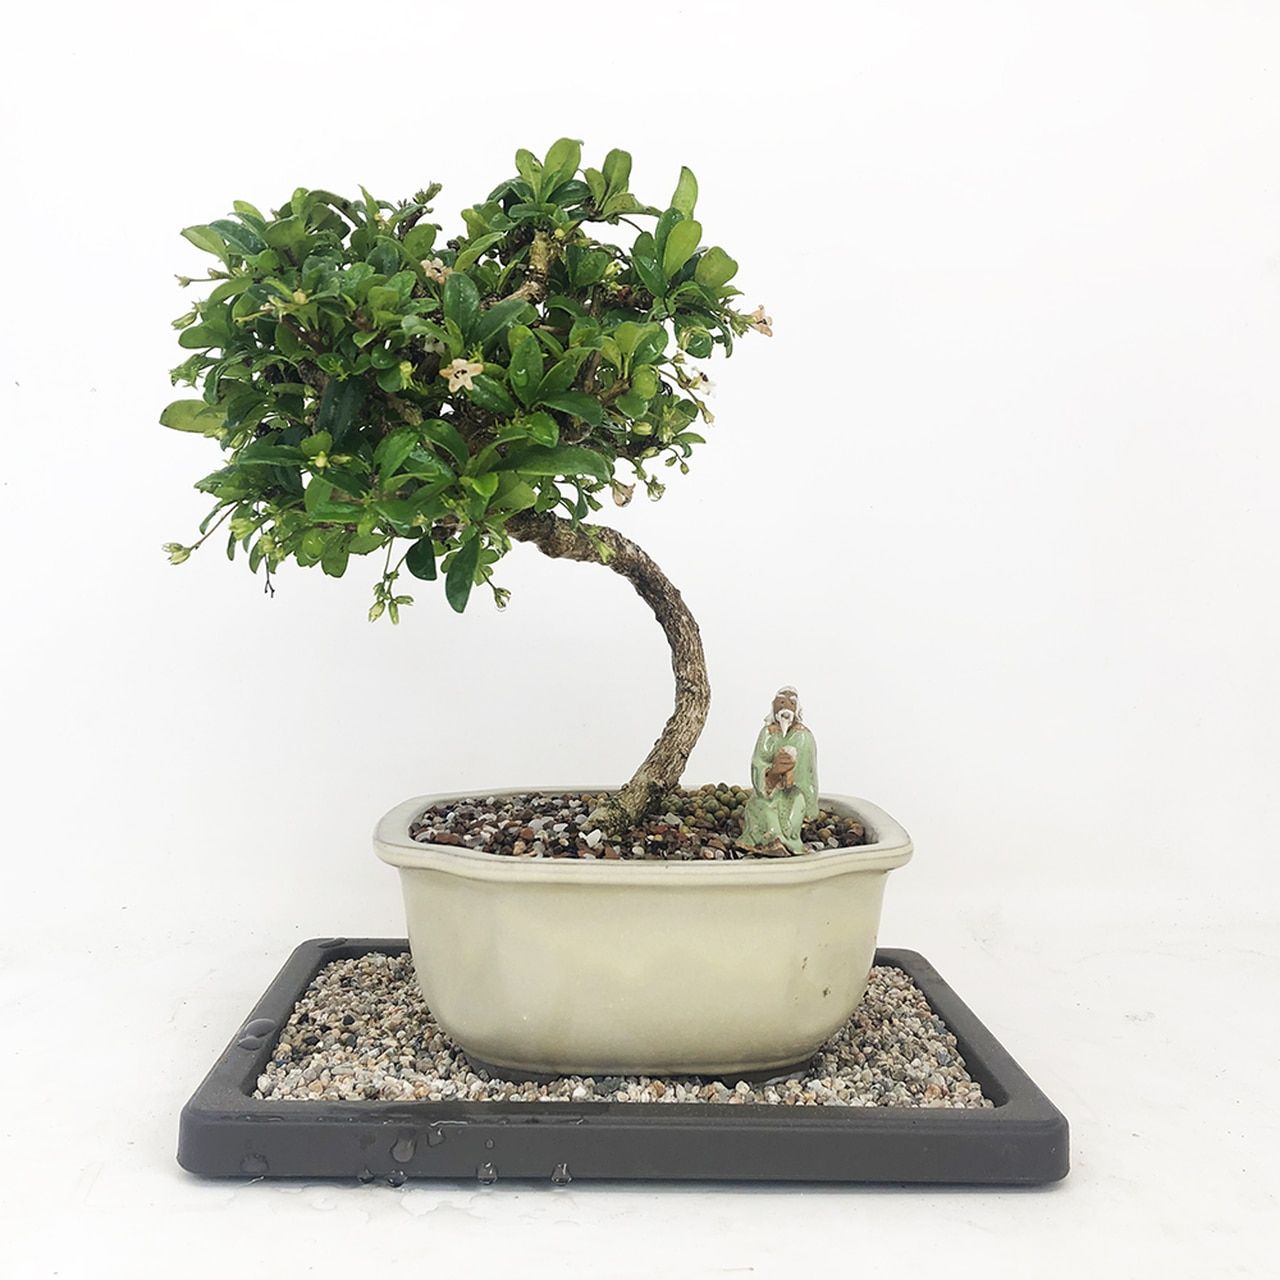 Carmona 6 Pot Indoor Houseplant Fukien Tea Bonsai Tree Pertaining To Carmon Ceramic Garden Tool (View 22 of 25)